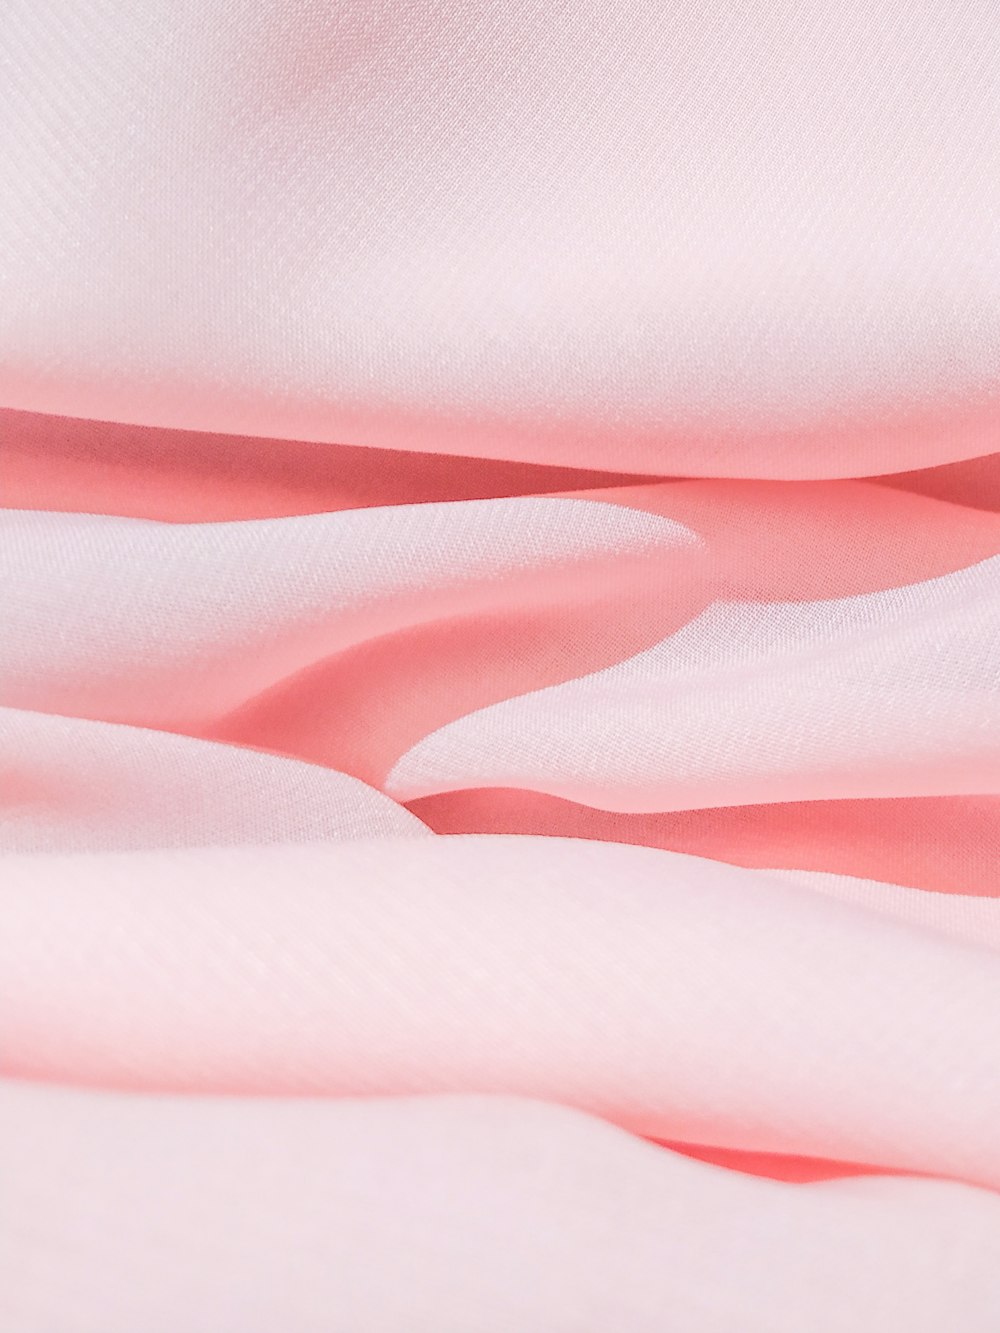 tessuto a righe rosa e bianche